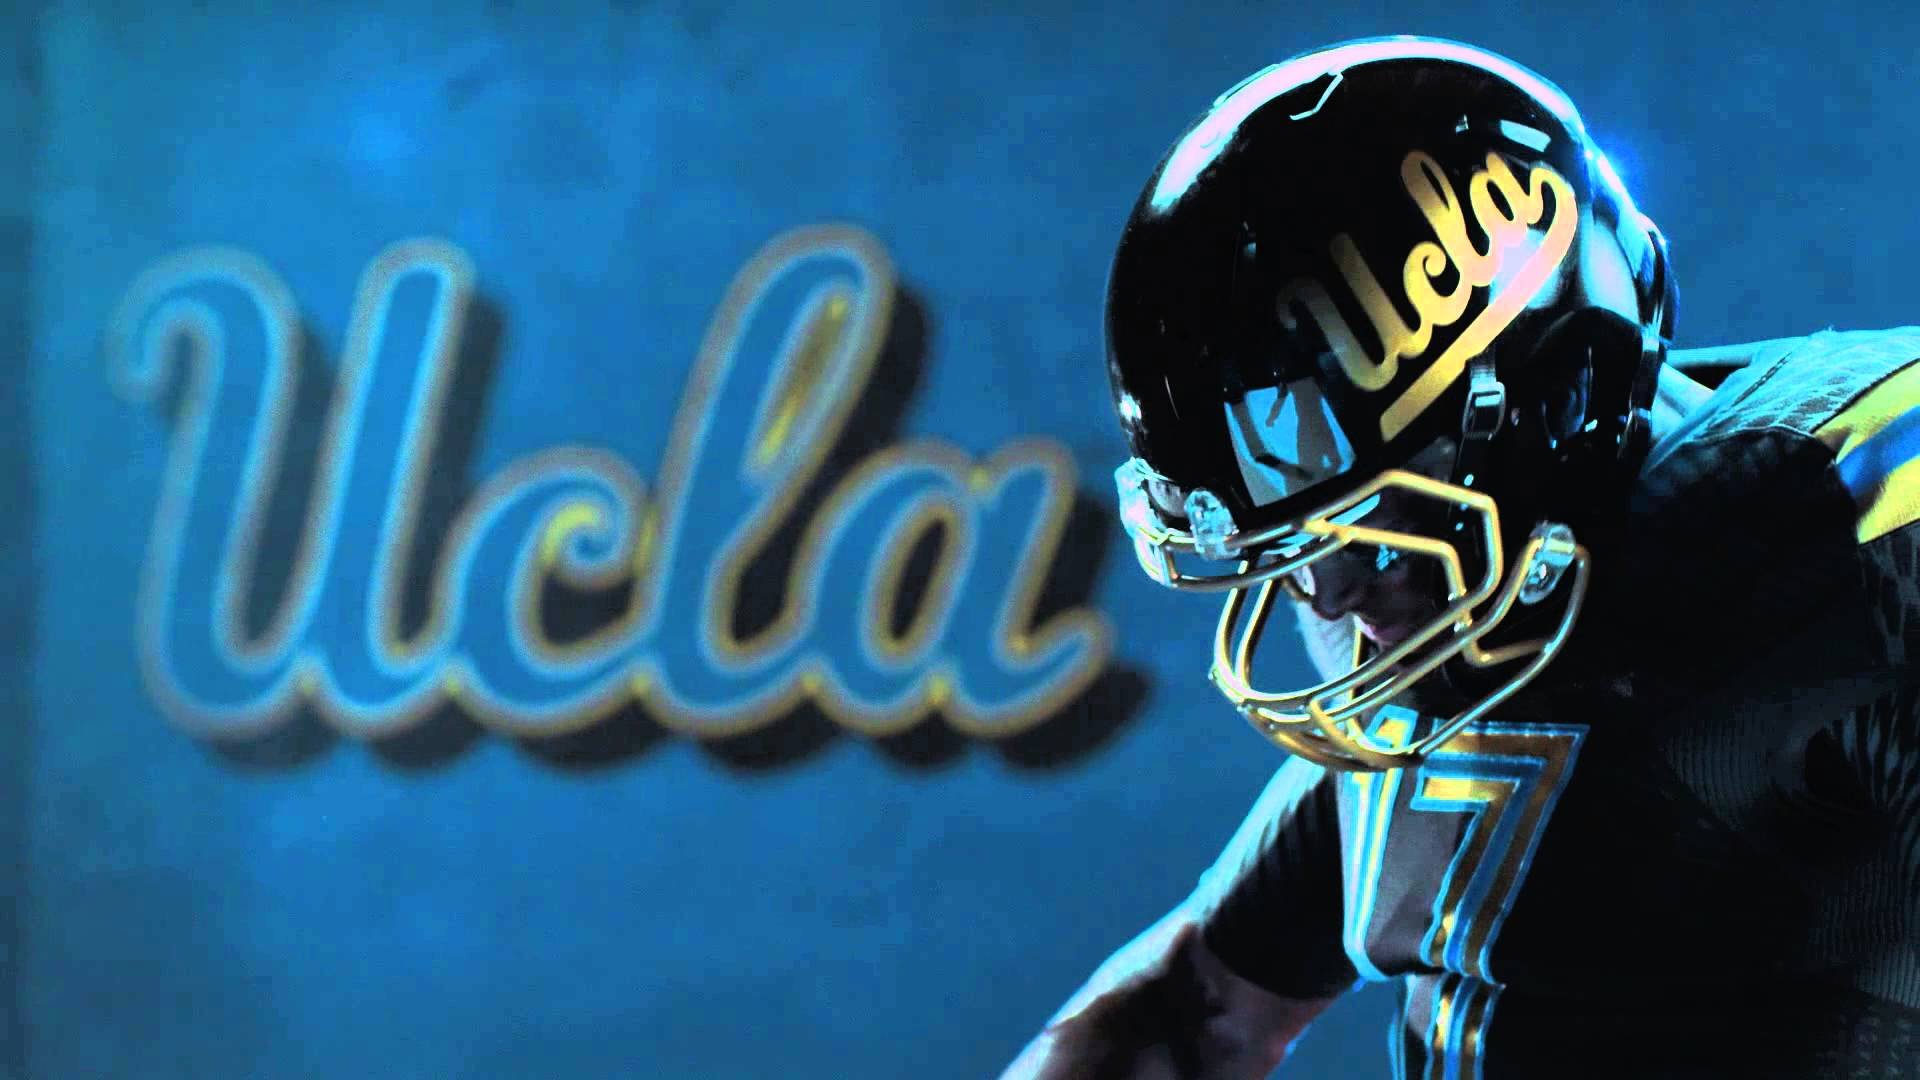 Ucla Bruins College Football California Wallpaper Background